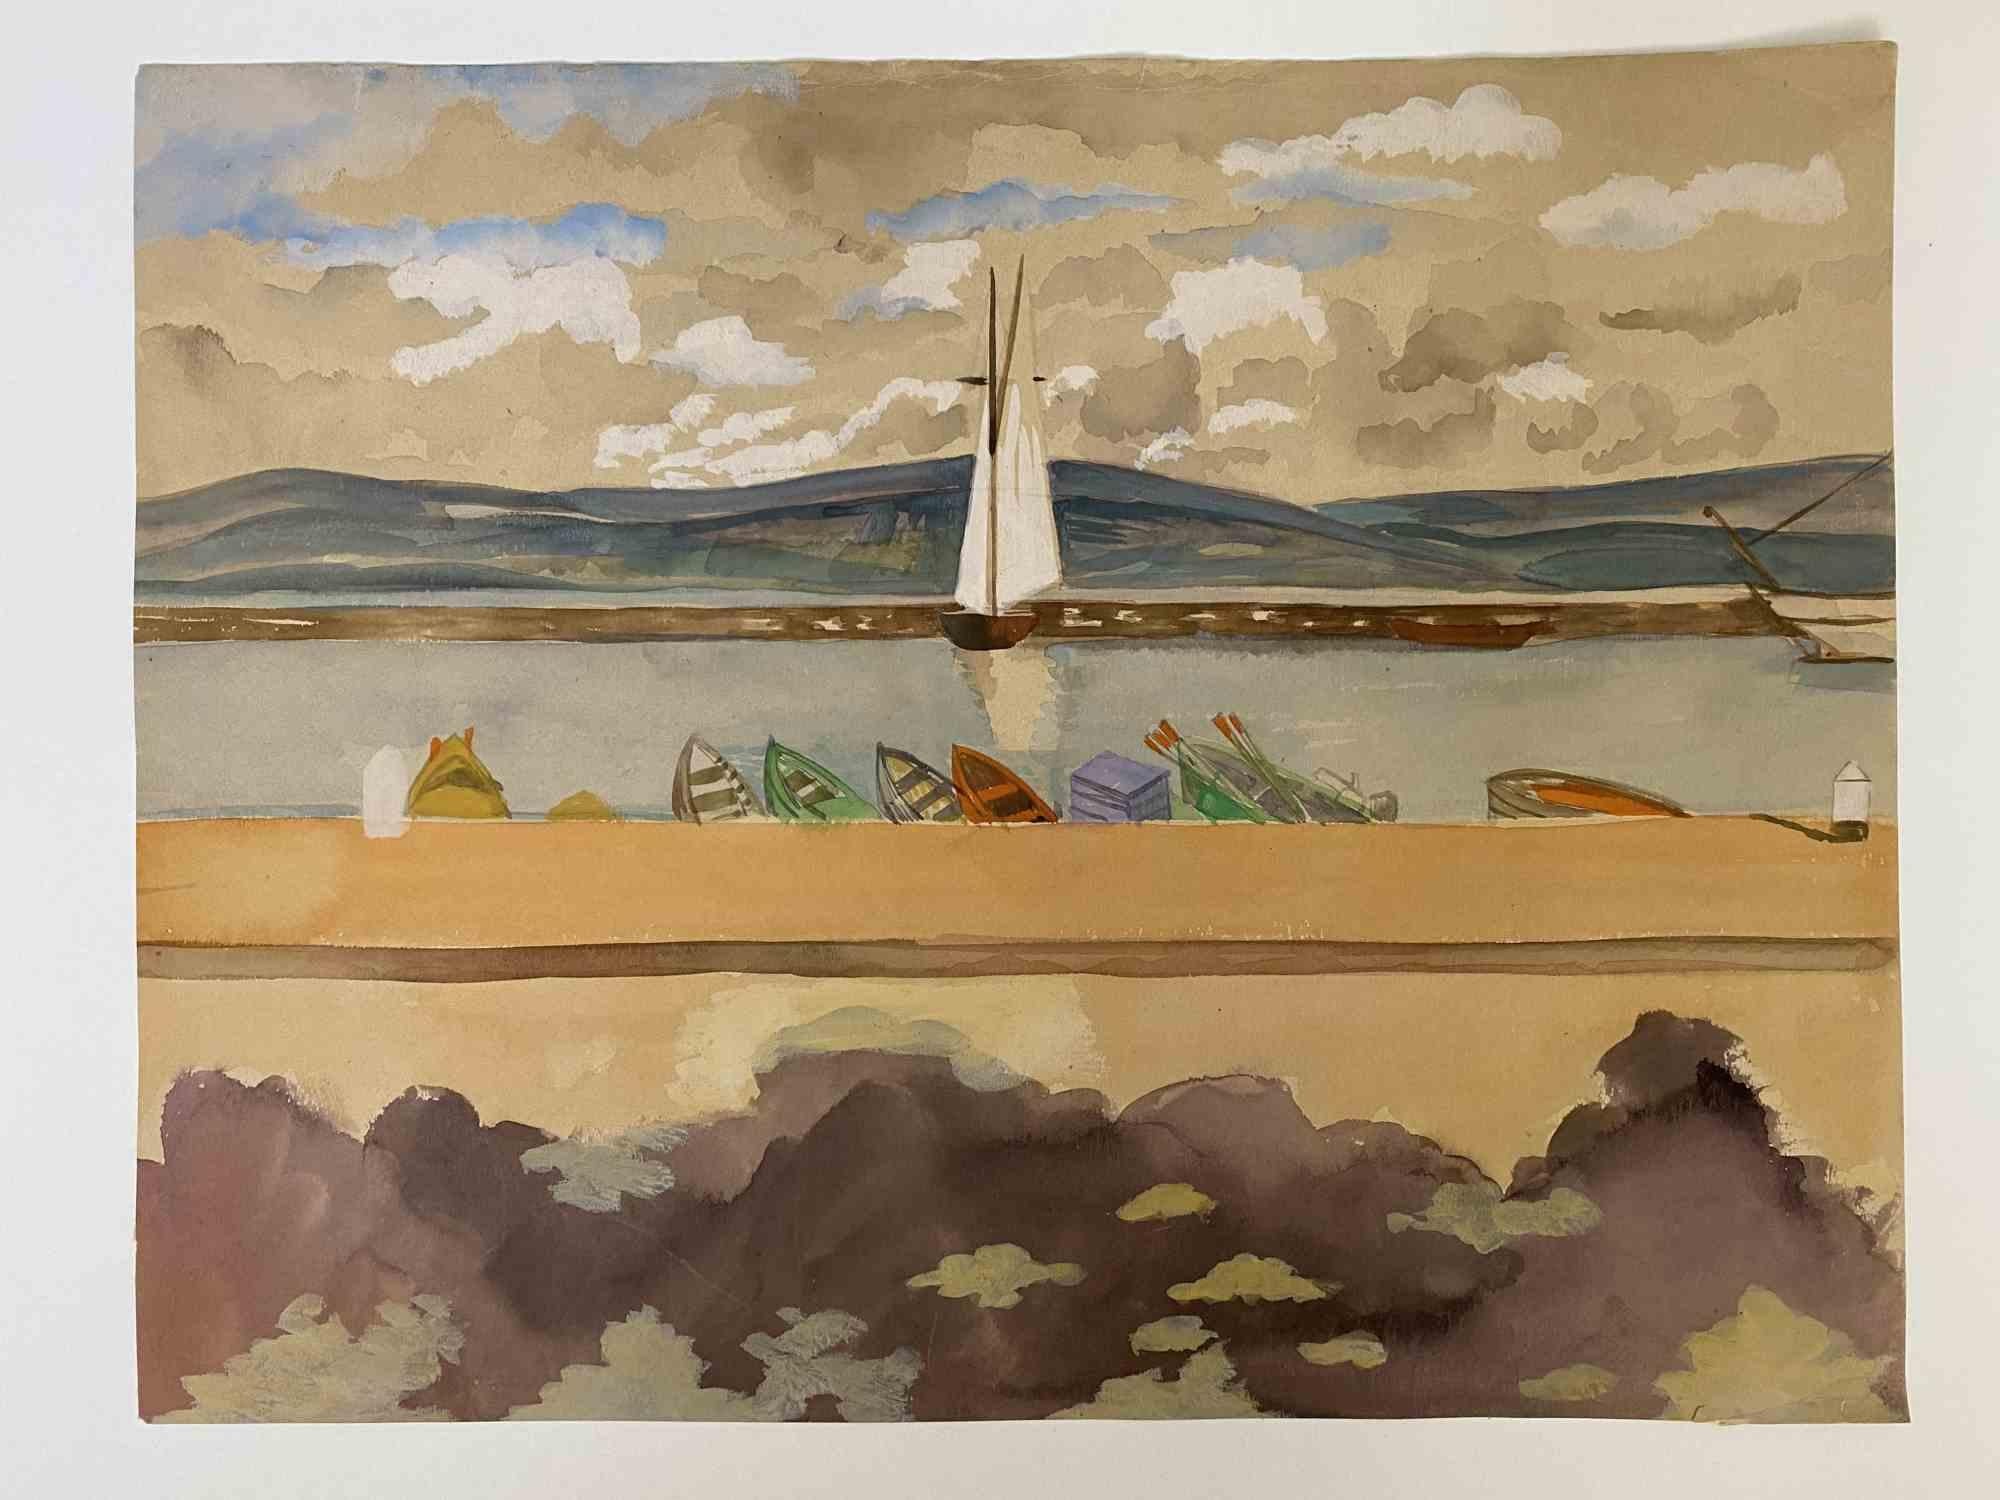 Unknown Landscape Art - The Boat in the Dock - Original Watercolor - 1945 ca